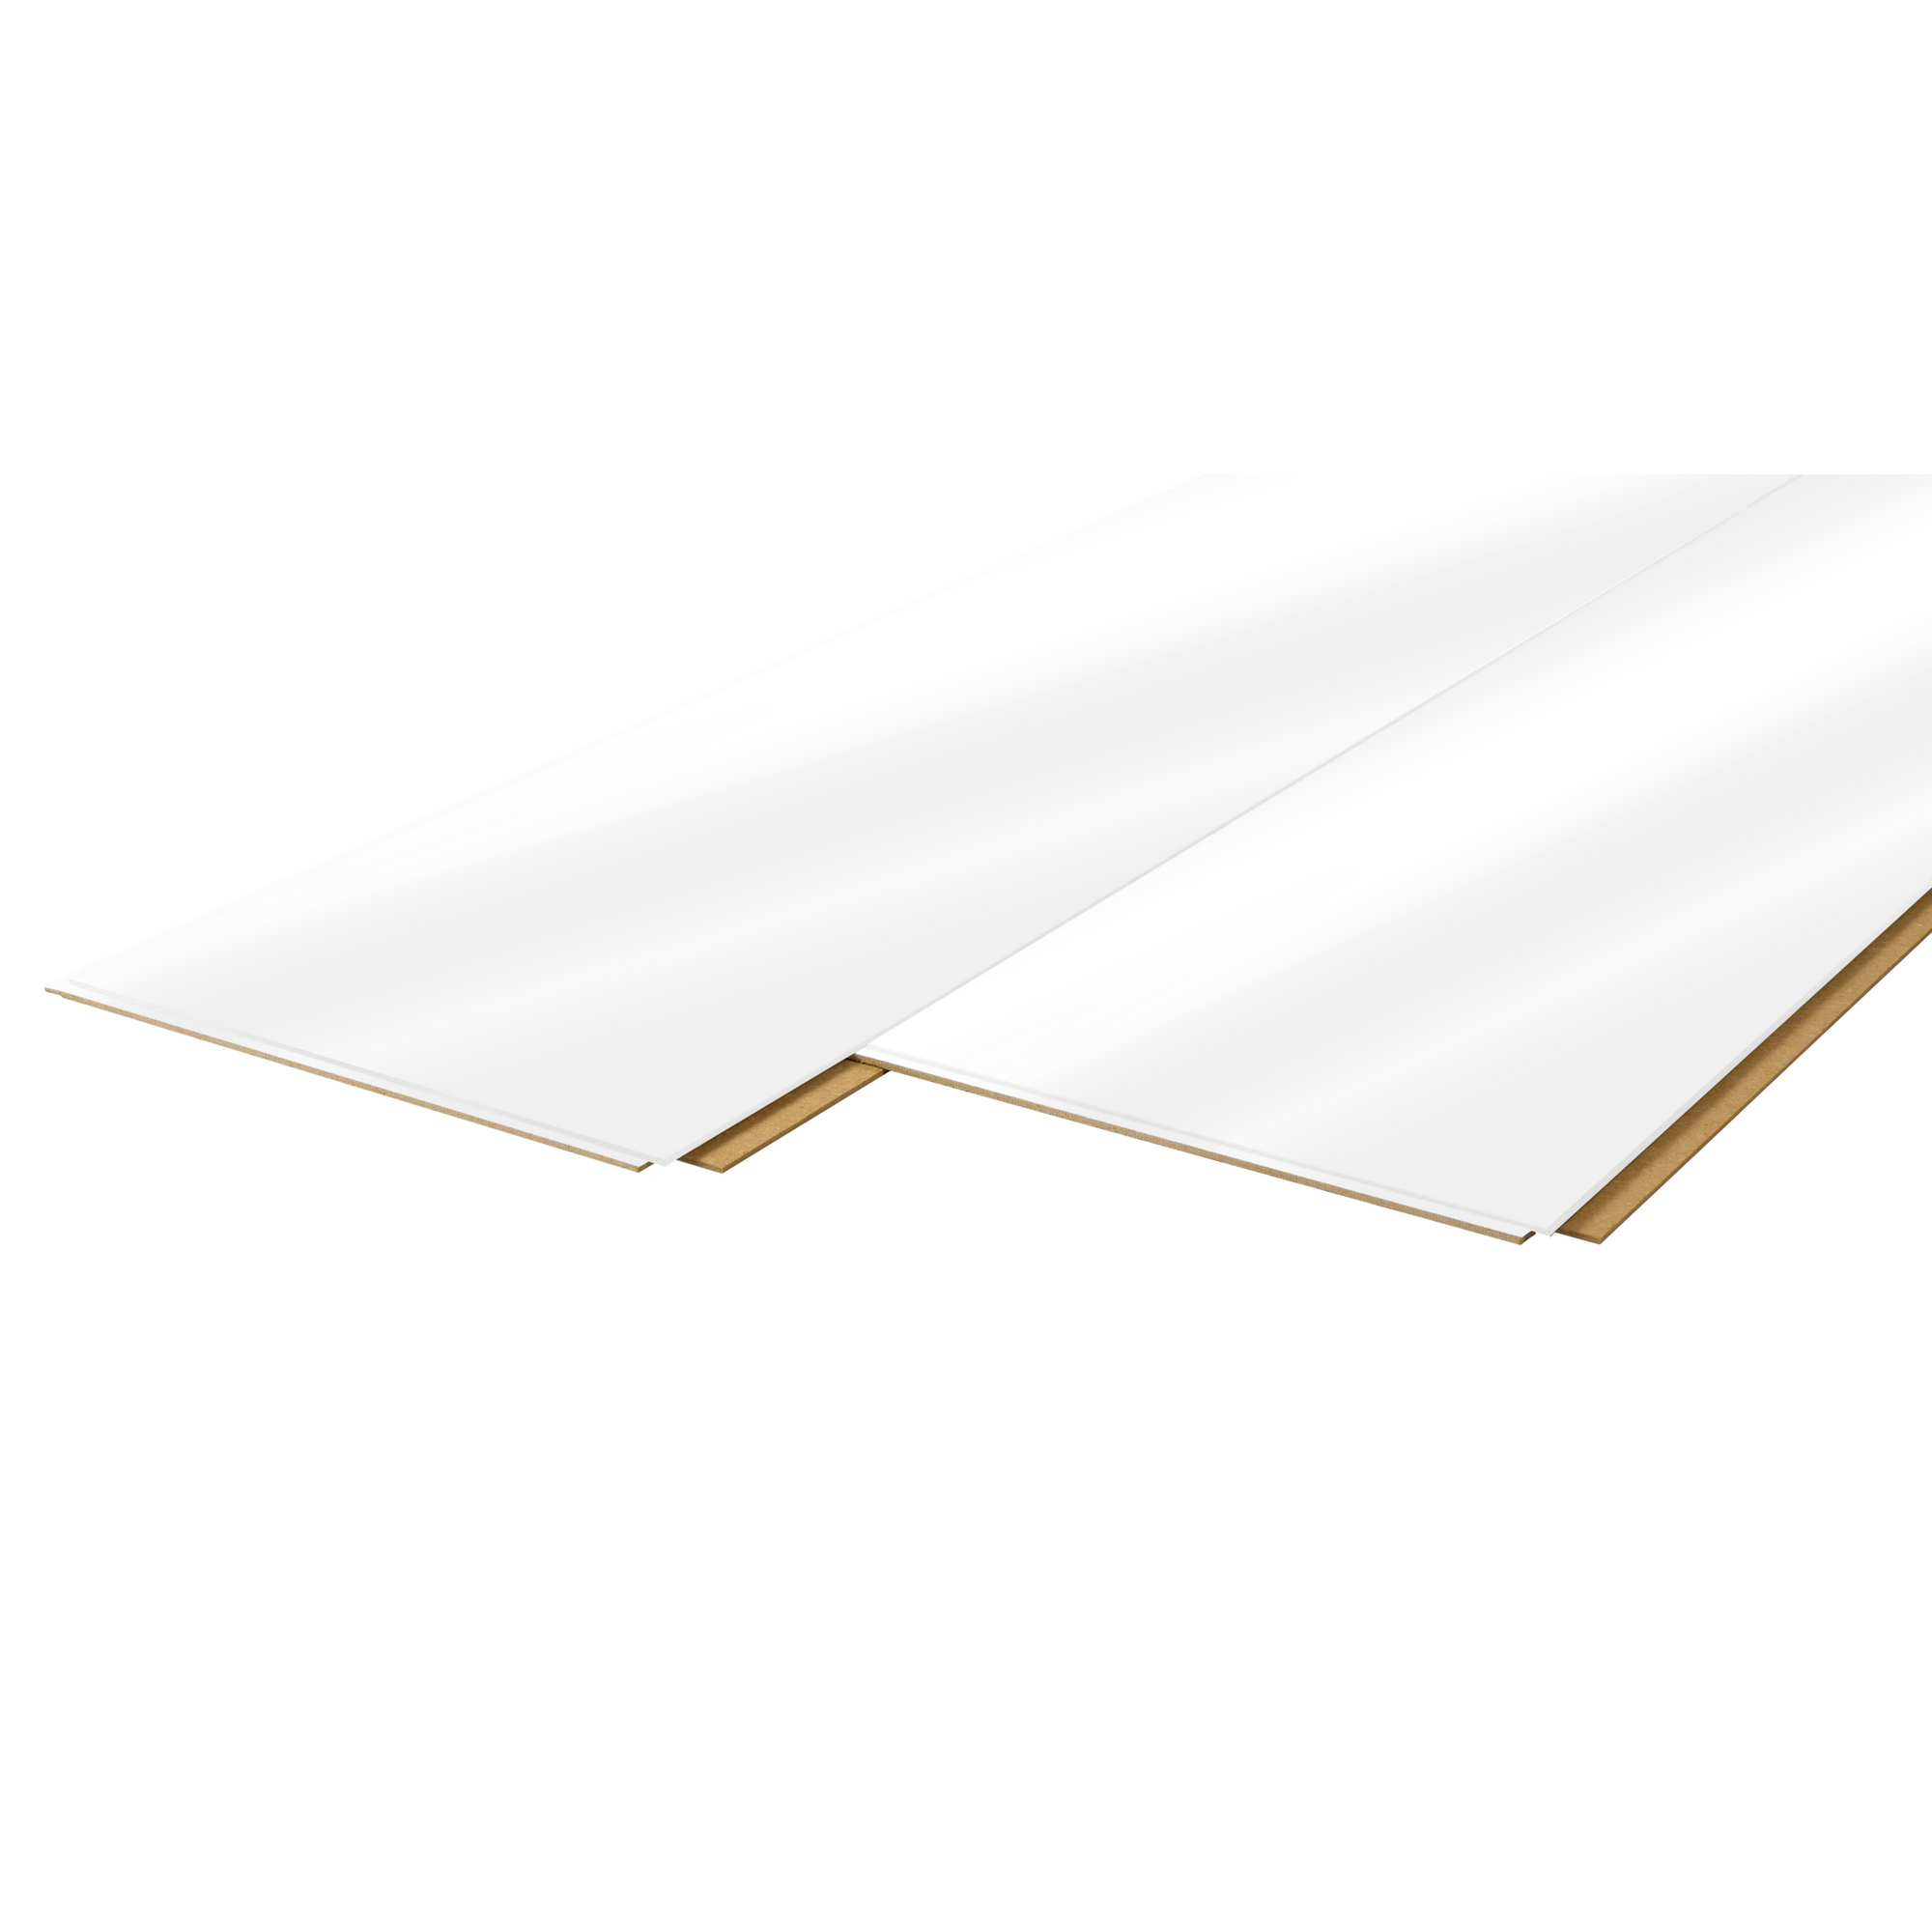 Paneele 'Coverboard' ultraweiß glänzend 260 x 62 x 1,2 cm + product picture